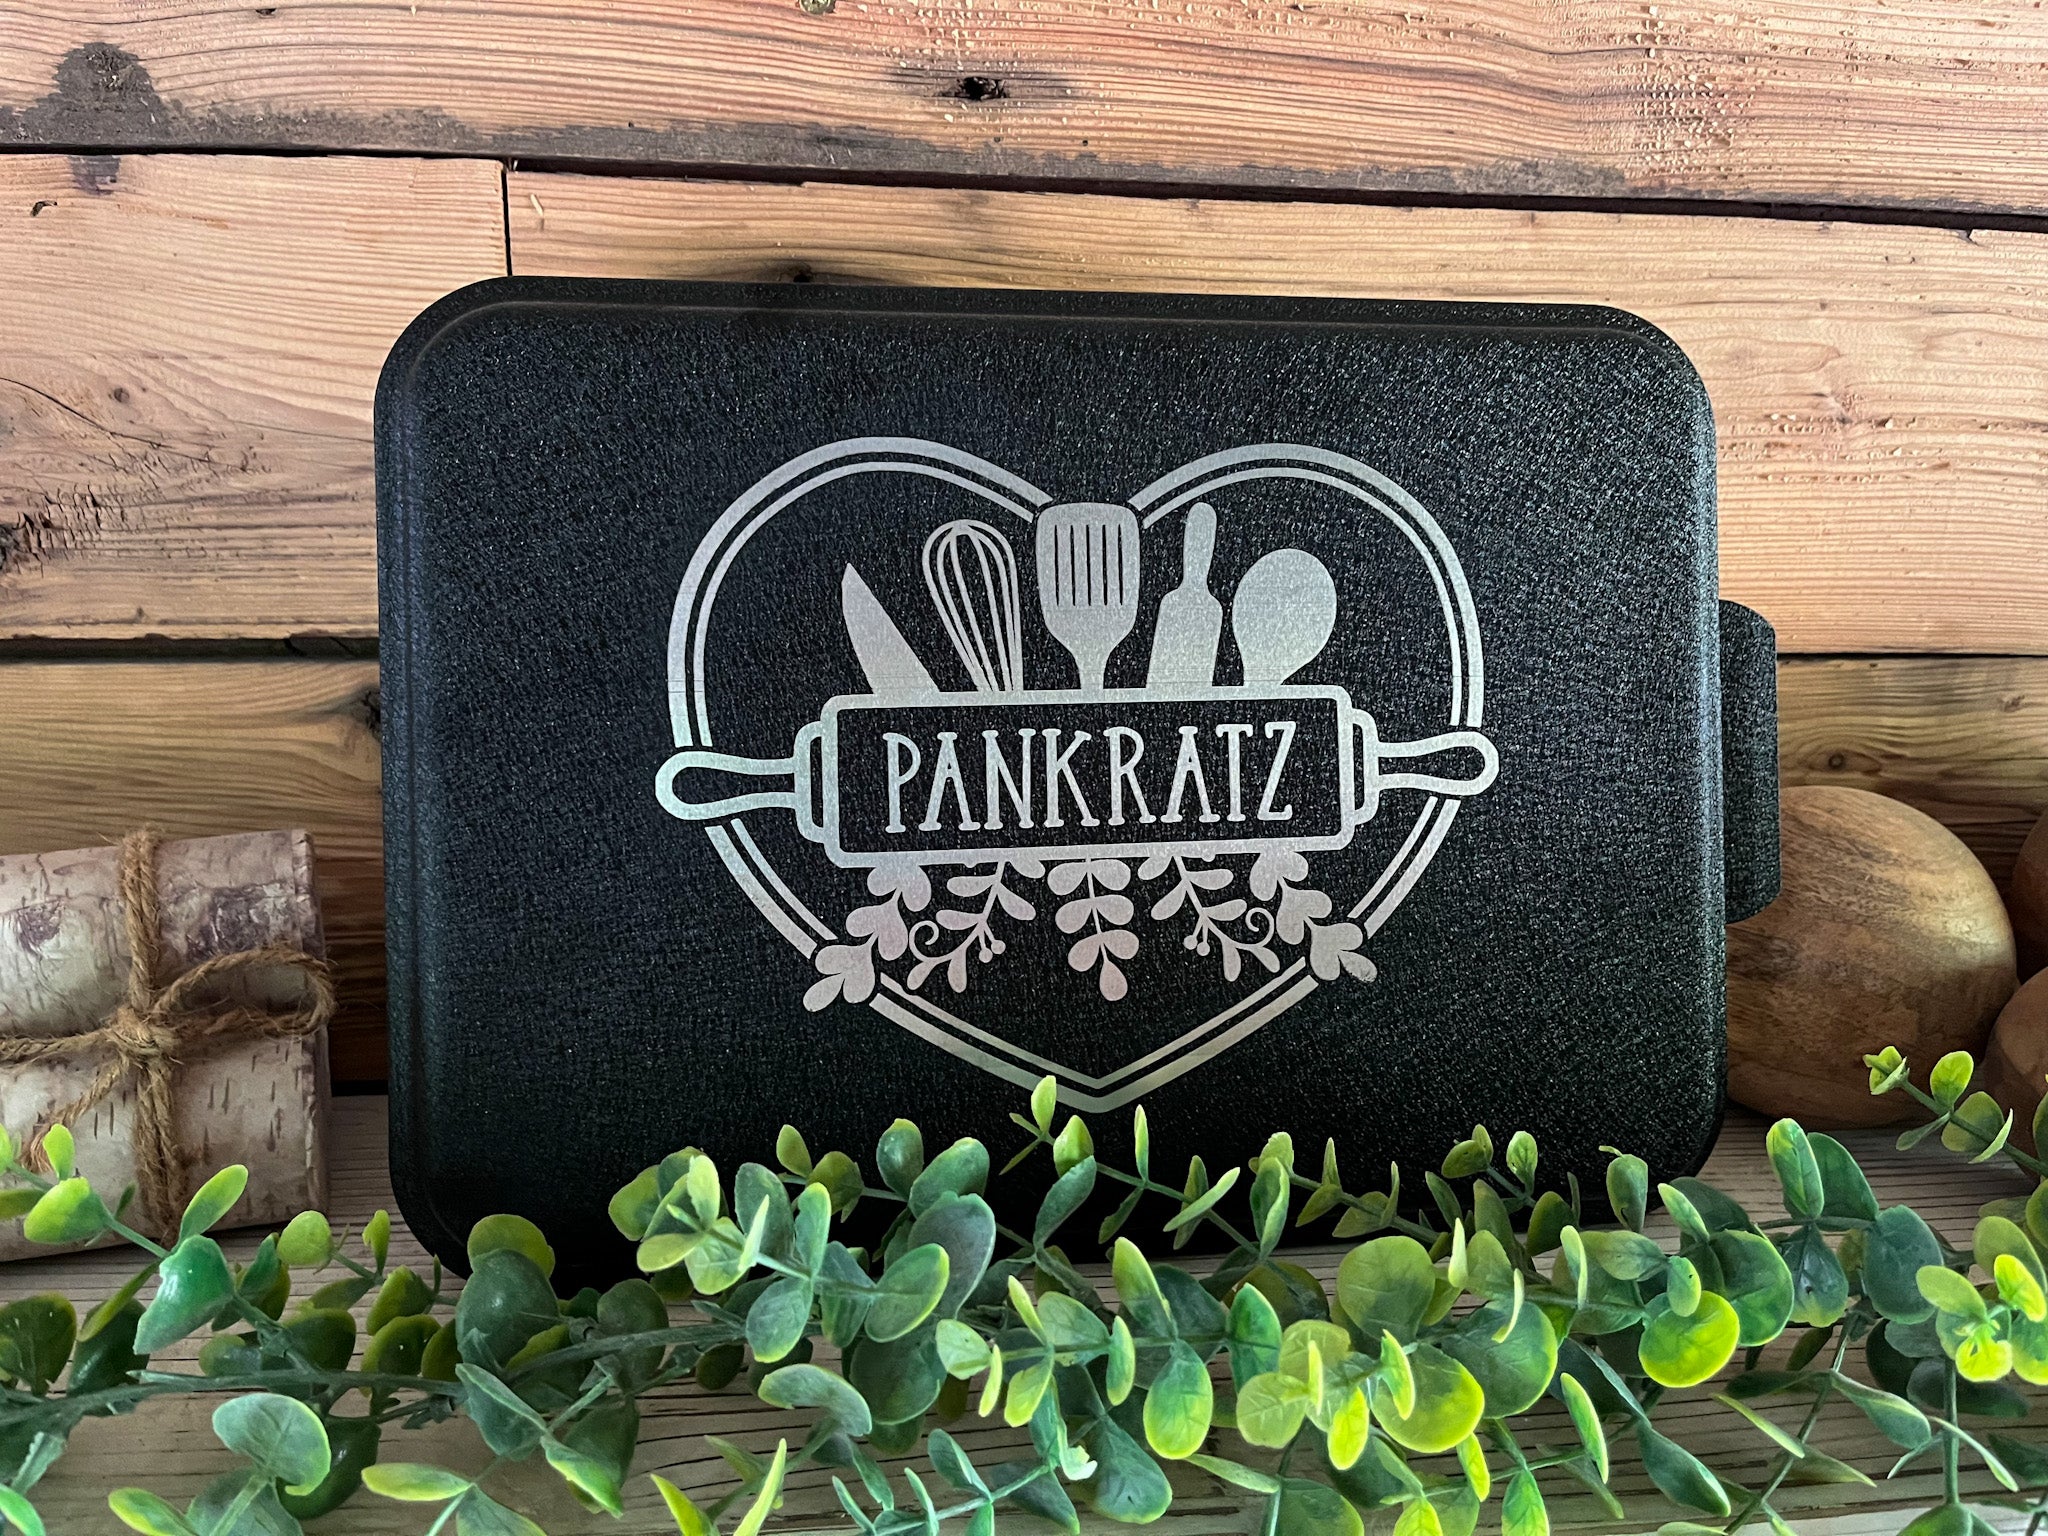 Custom Engraved Cake Pan | Personalized Metal Cake Pan | 9x13 Aluminum Cake Pan with Engraved Lid